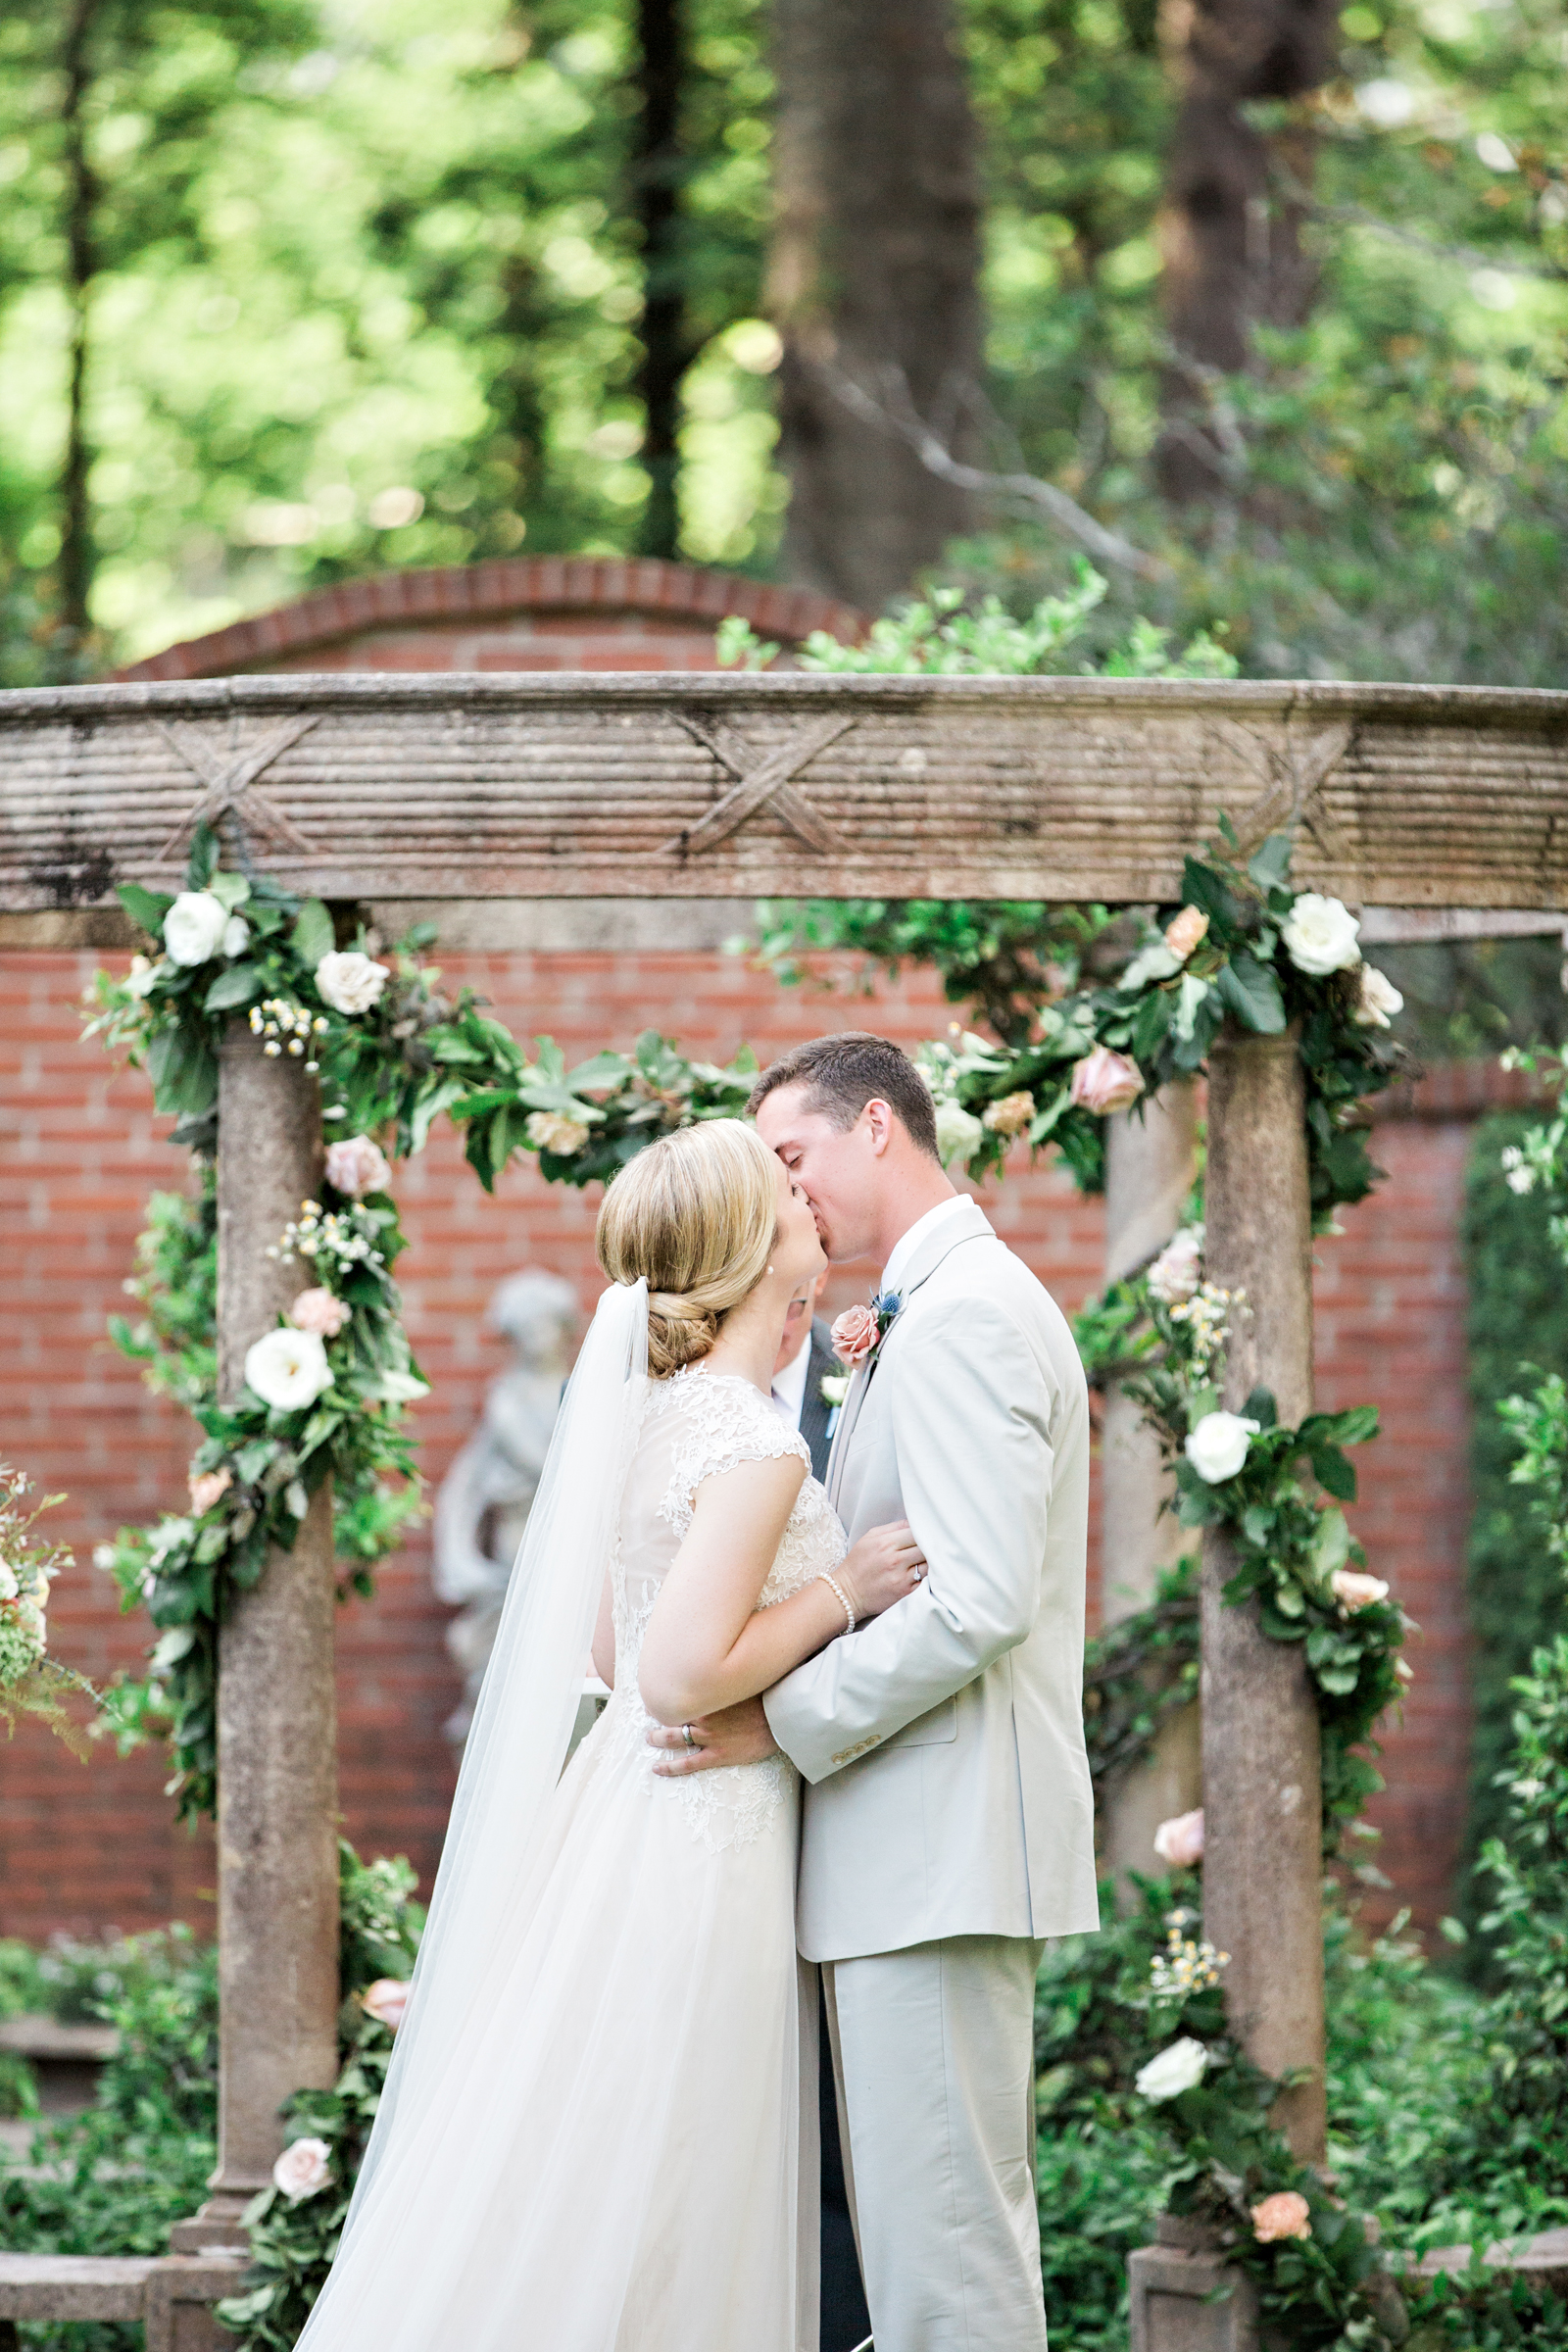 Matty-Drollette-Photography-Alabama-Weddings-Sara and Logan-138.jpg